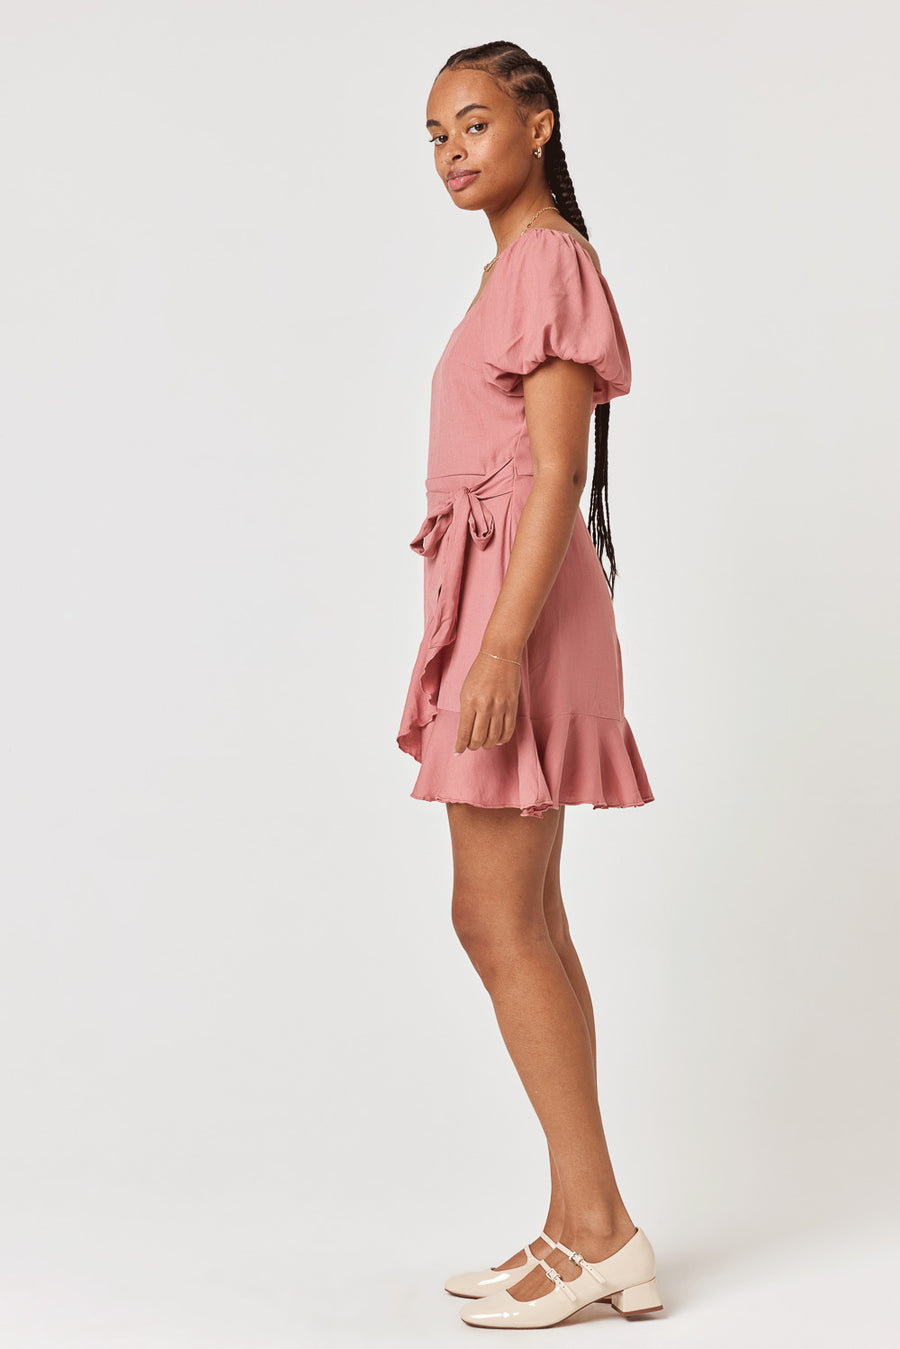 Rose Puff Sleeve Wrap Dress - Trixxi Clothing